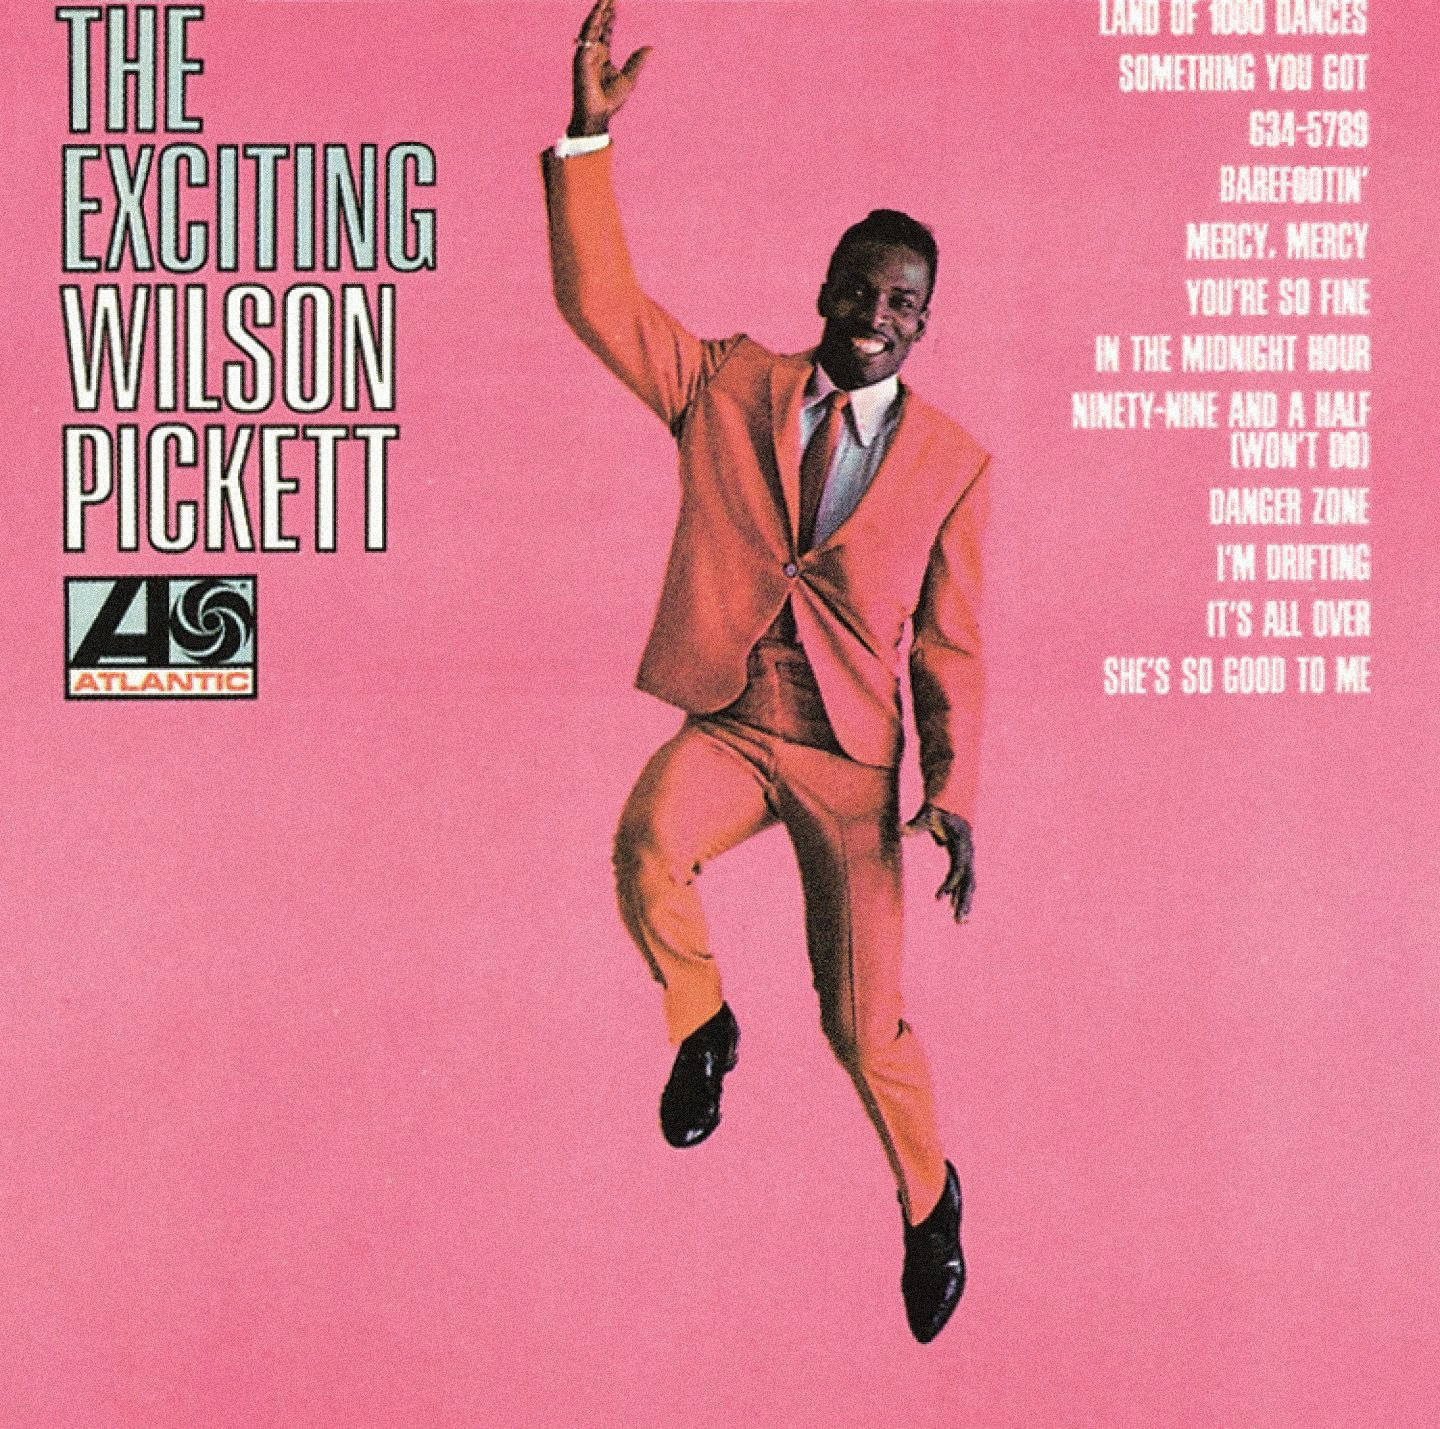 American Singer Wilson Pickett The Exciting Album Wallpaper